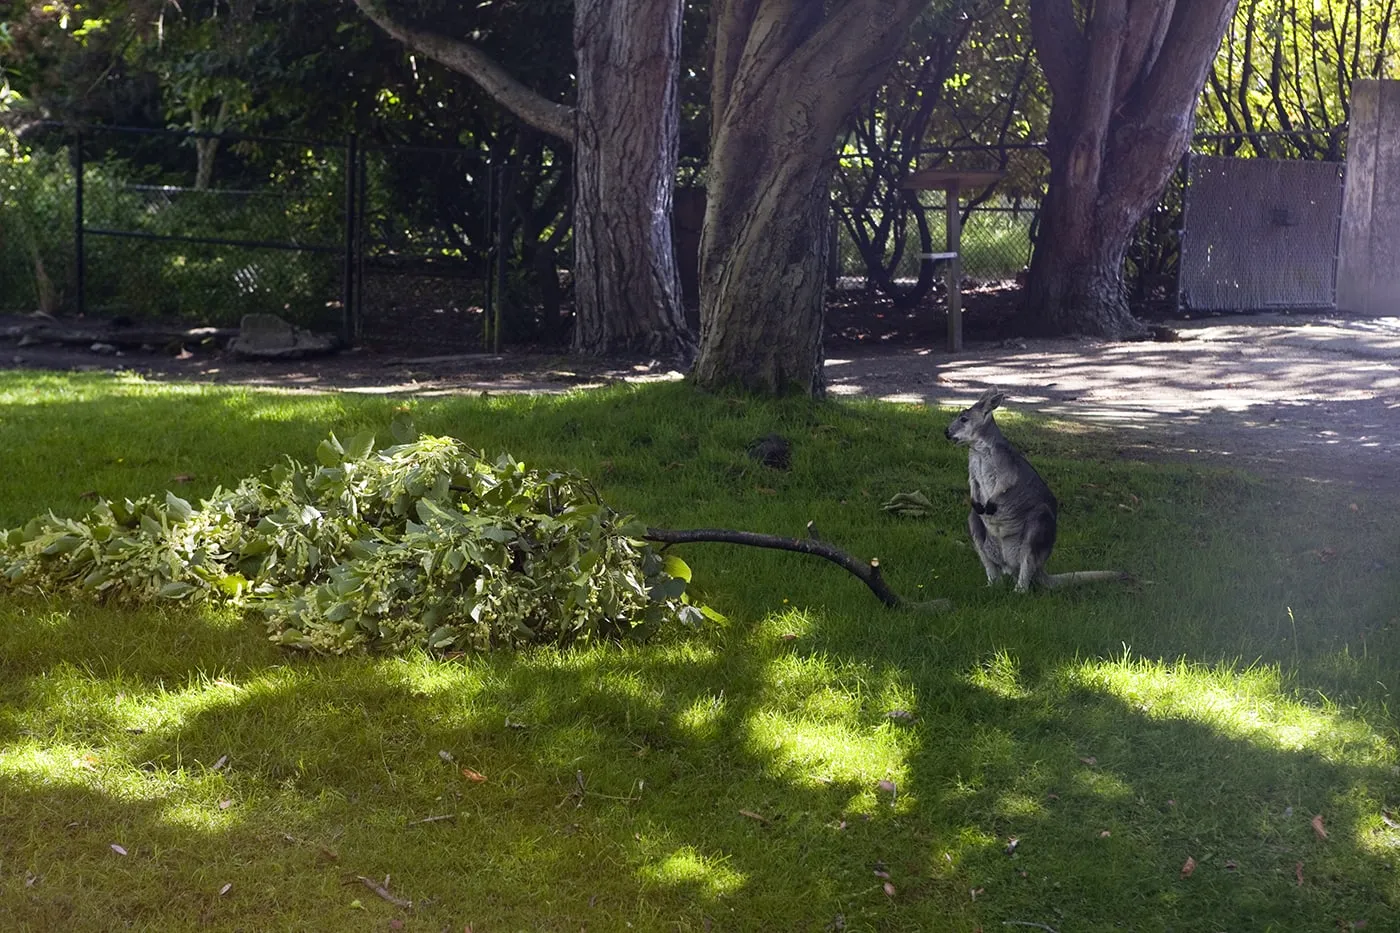 Kangaroo at Woodland Park Zoo in Seattle, Washington.